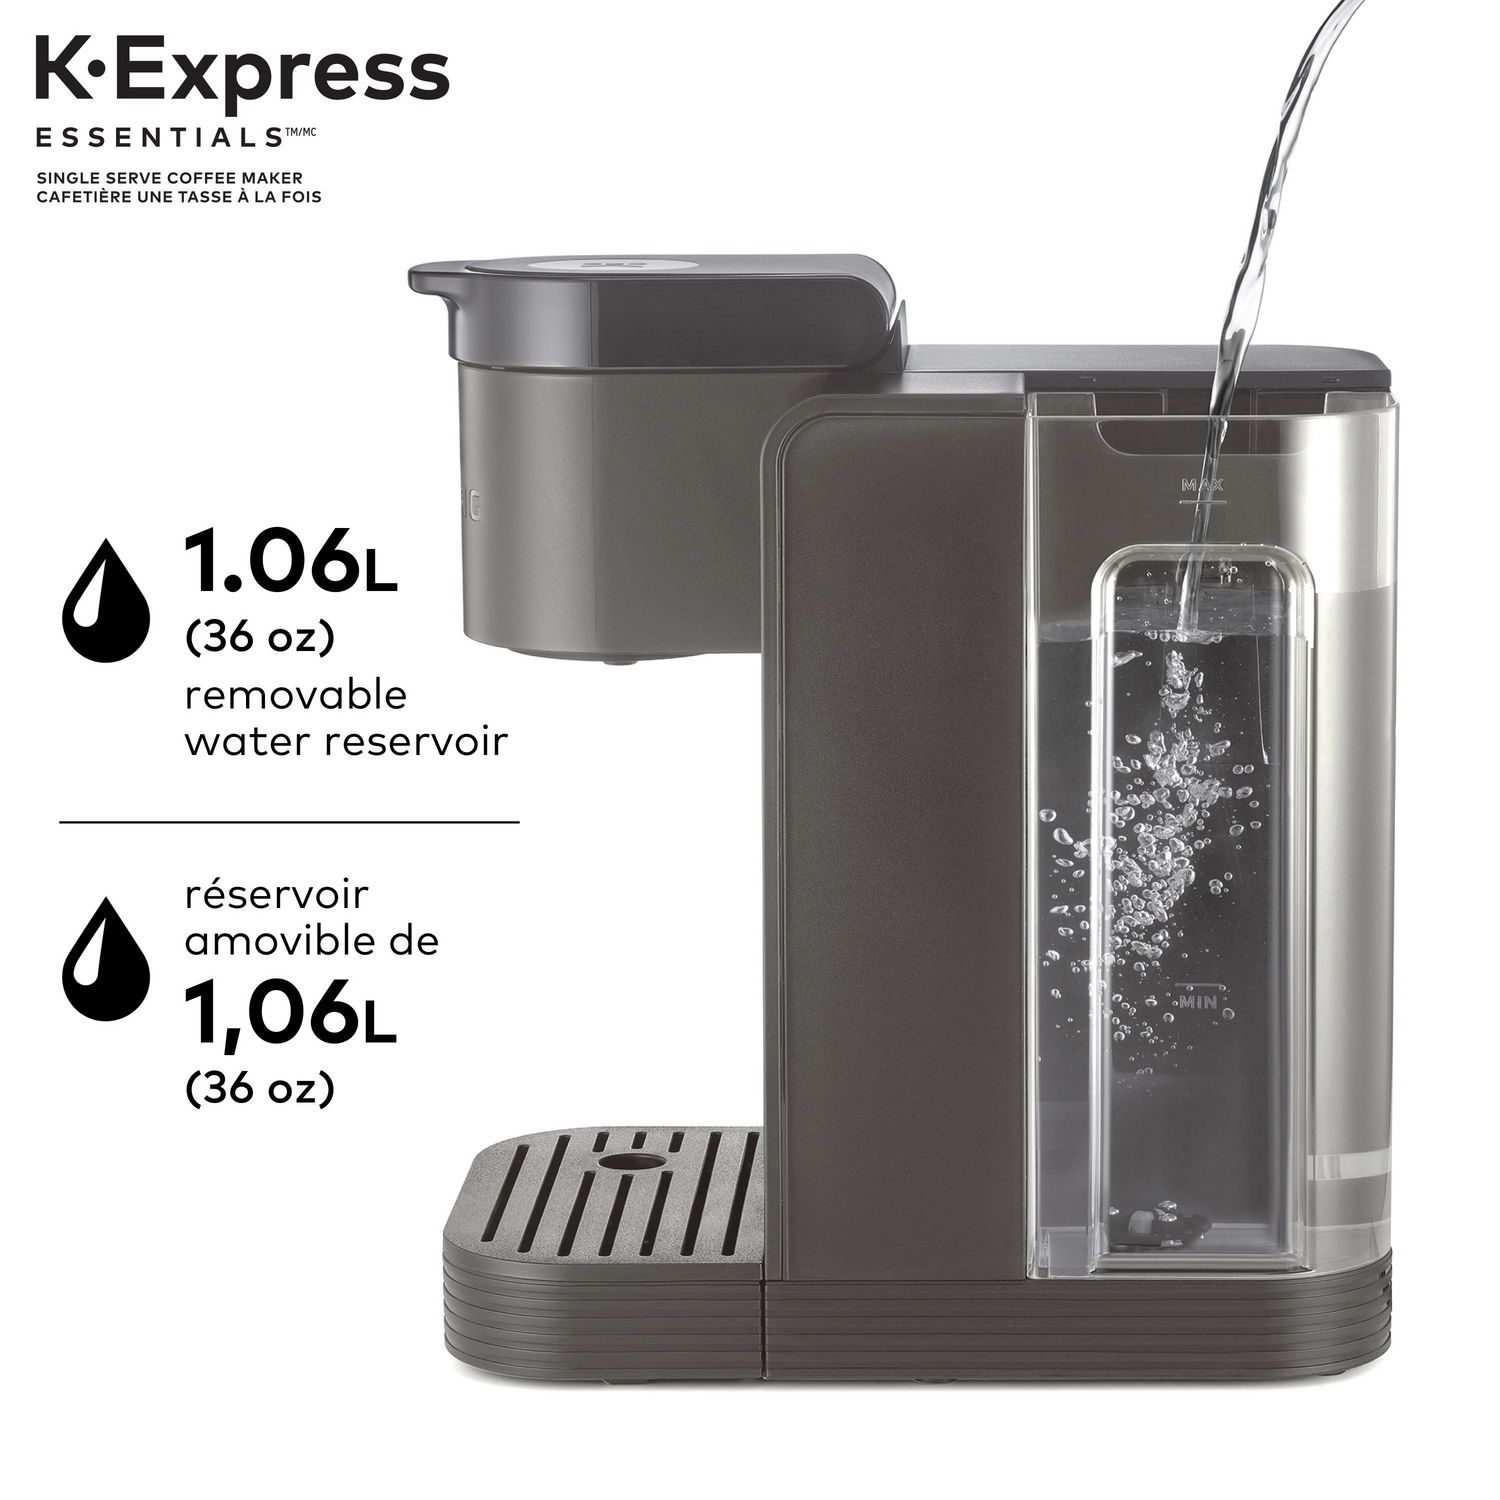 Keurig K-Express Essentials Single Serve Coffee Maker, Perfect for